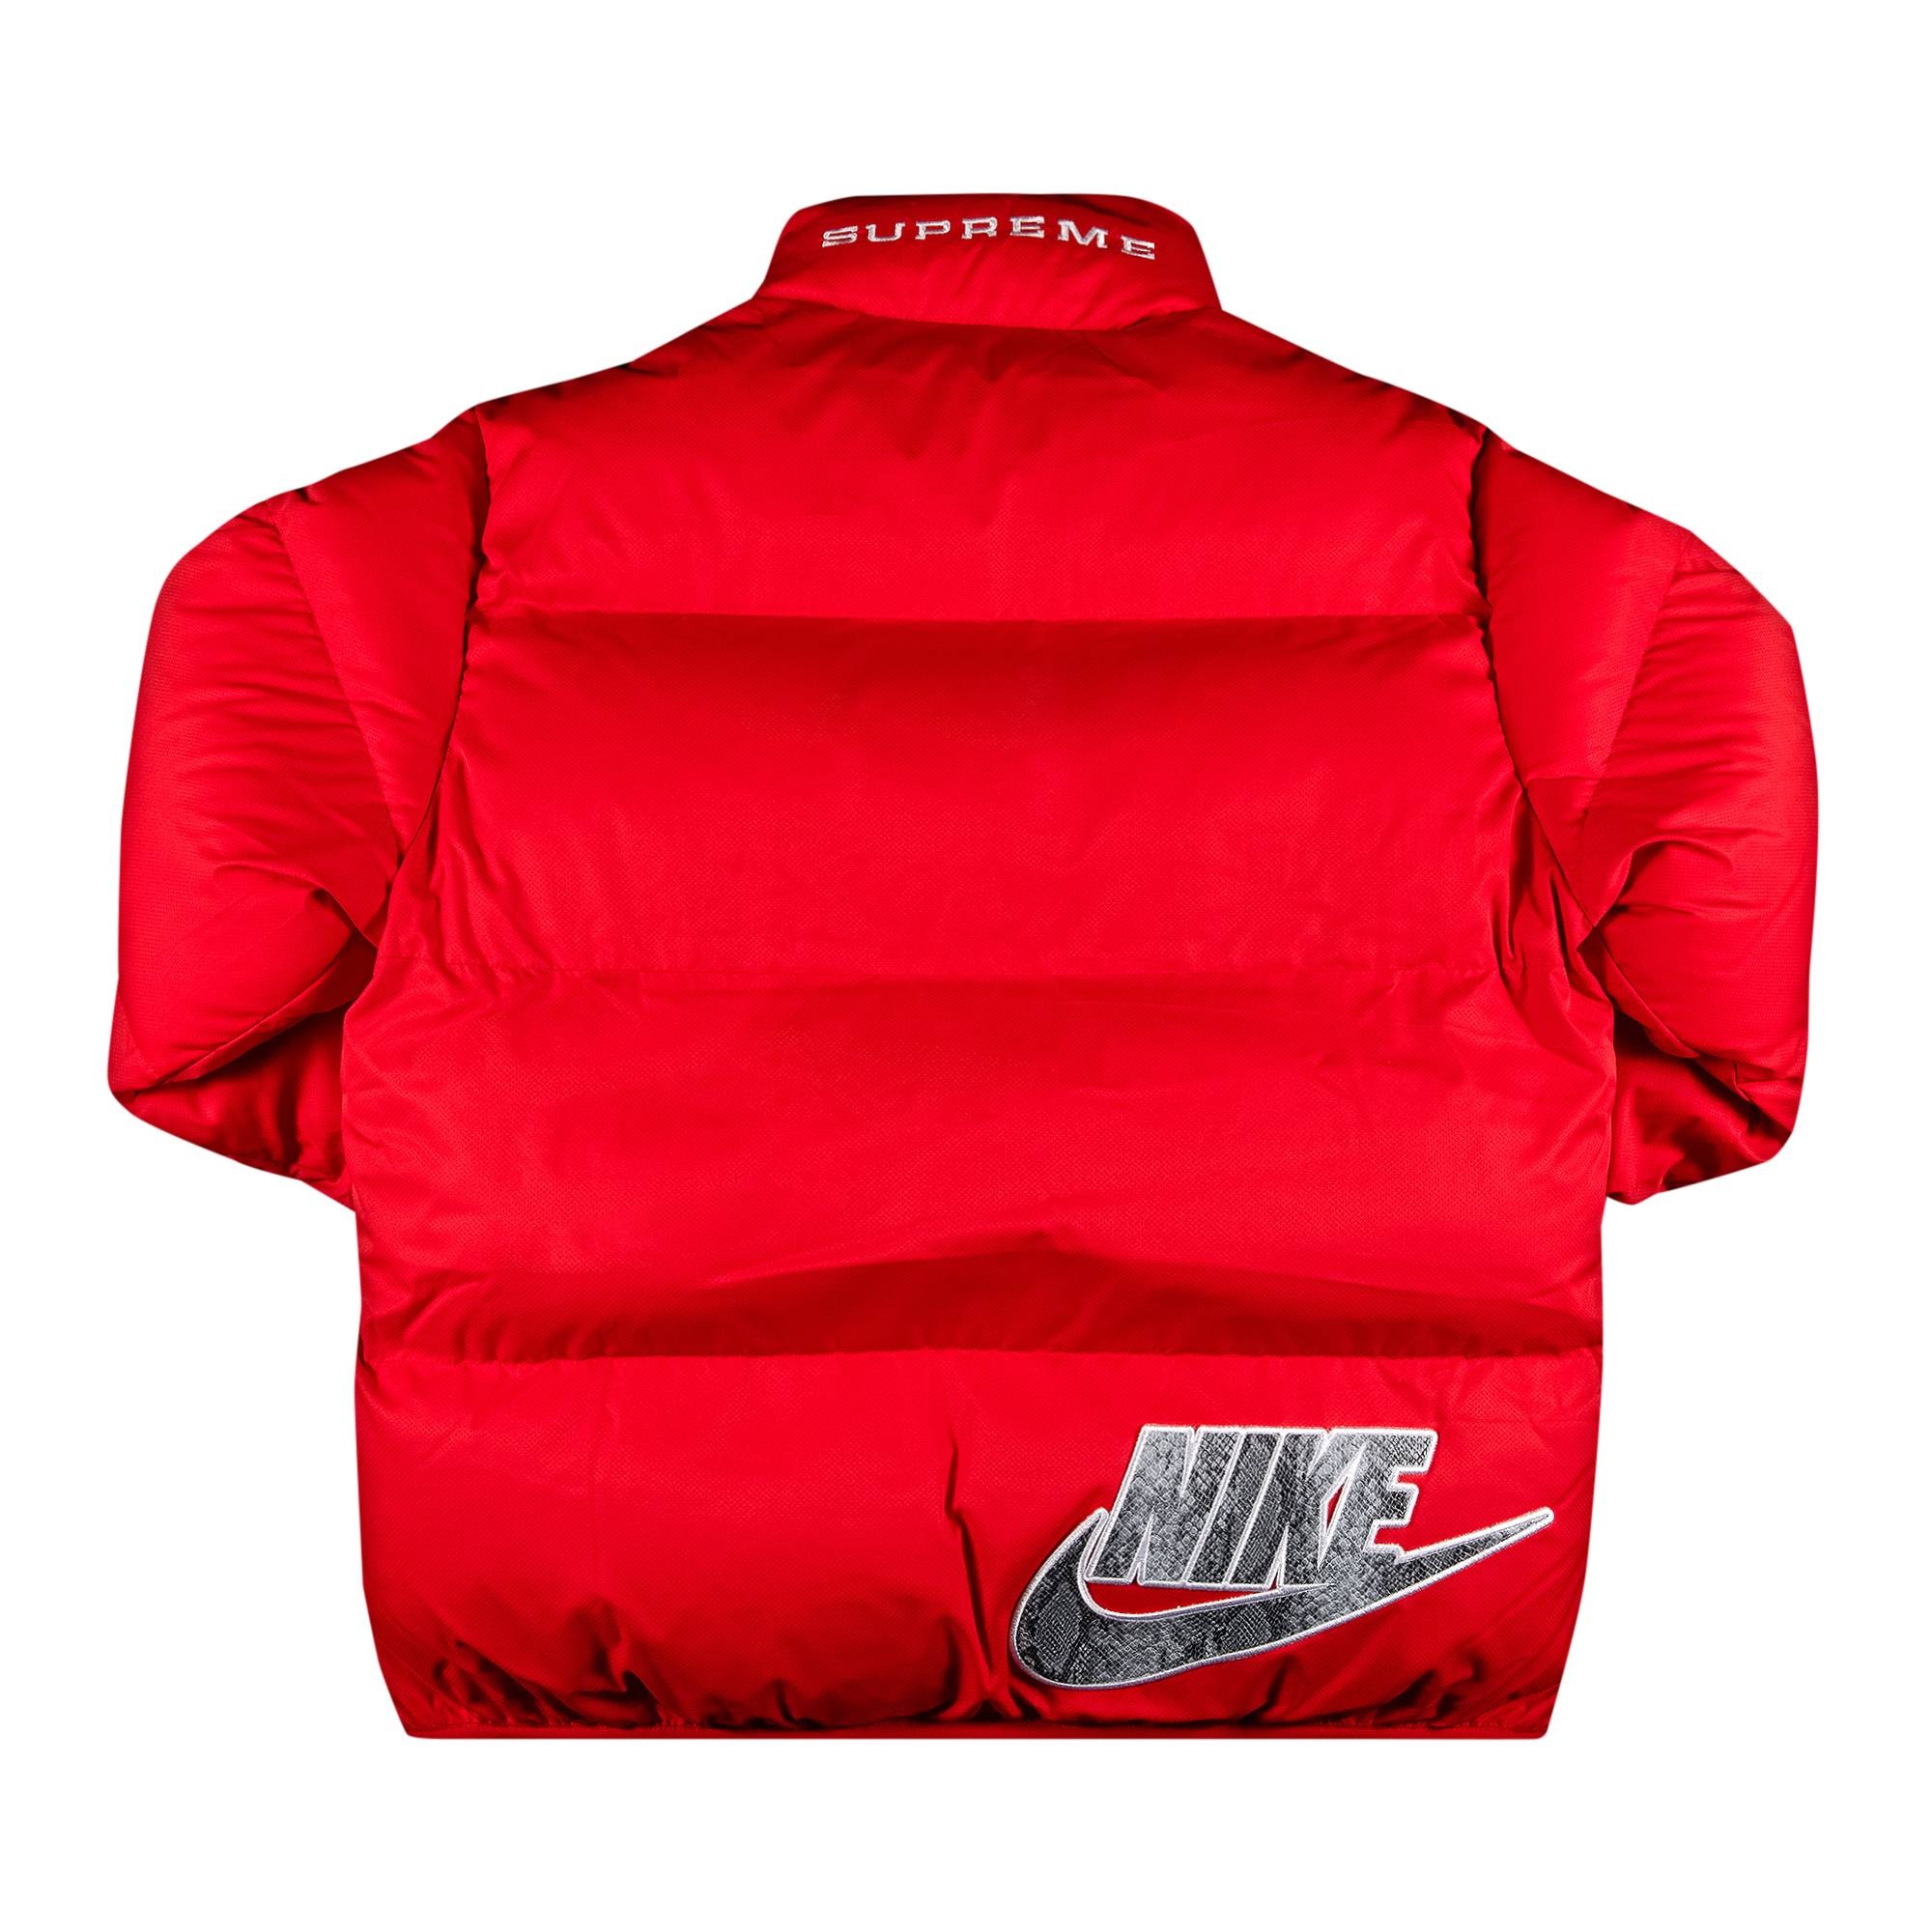 Supreme x Nike Reversible Puffy Jacket 'Red' - 2